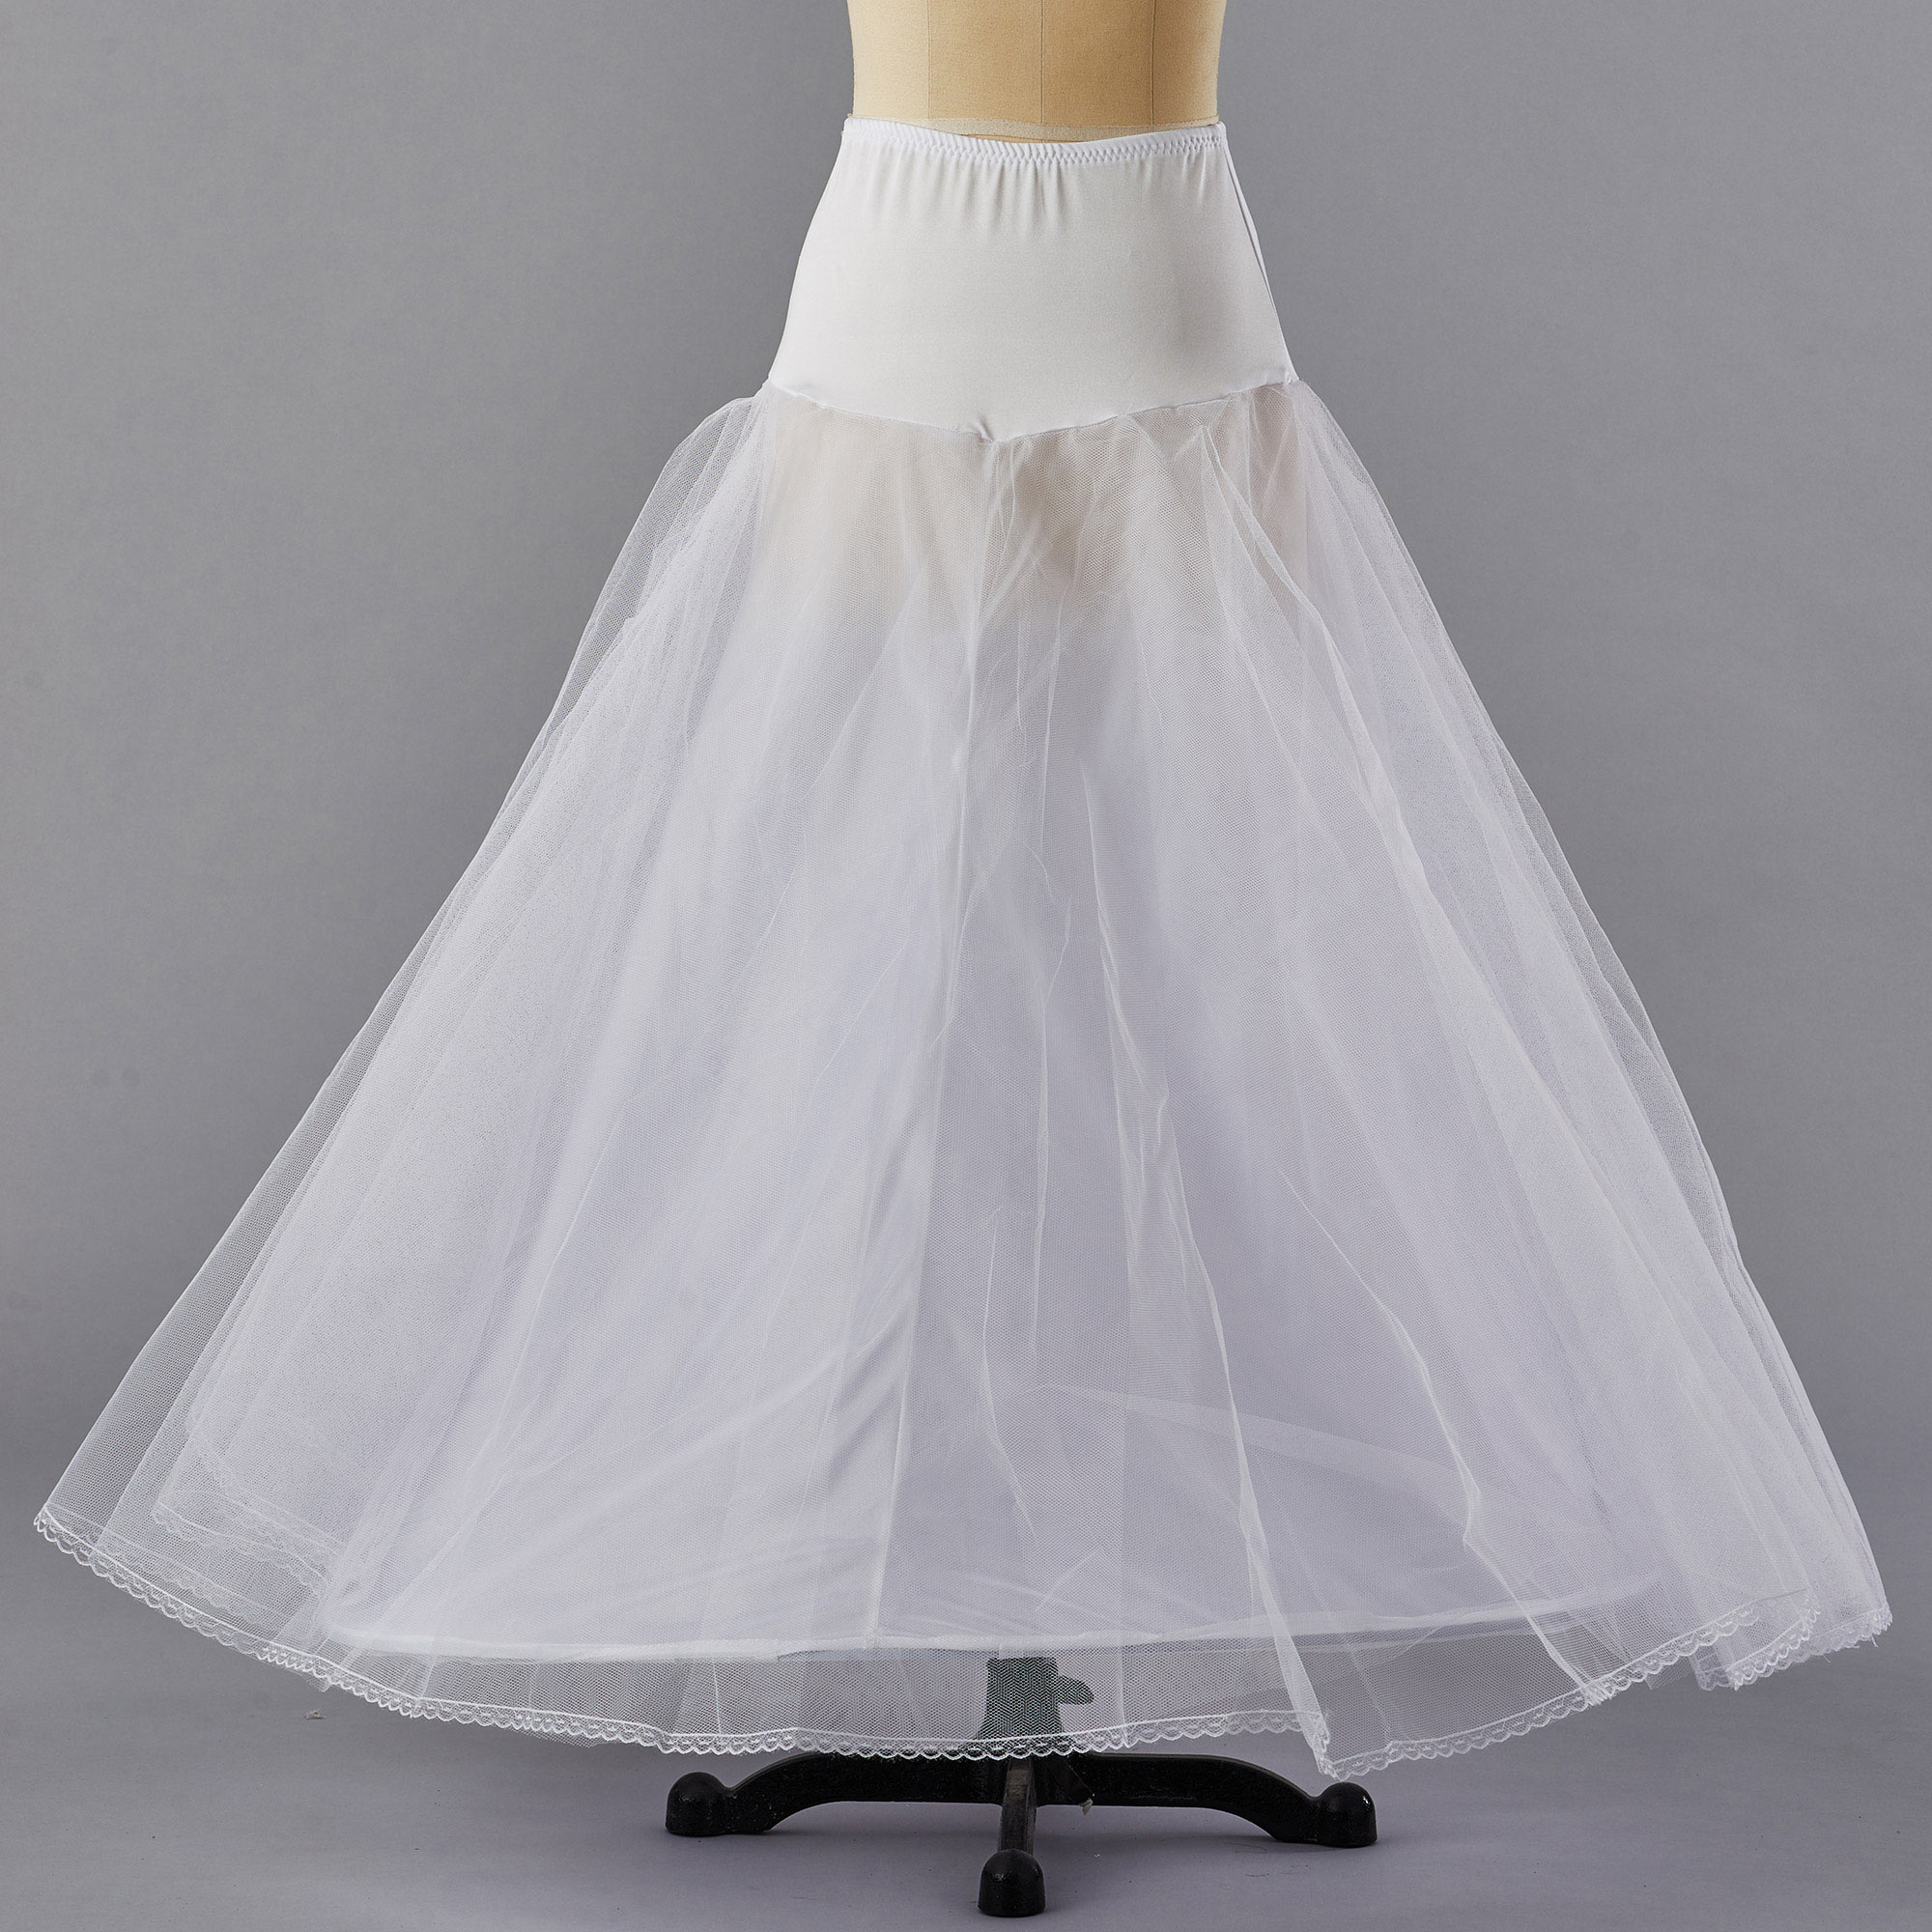 A-Line Style Wedding Petticoat